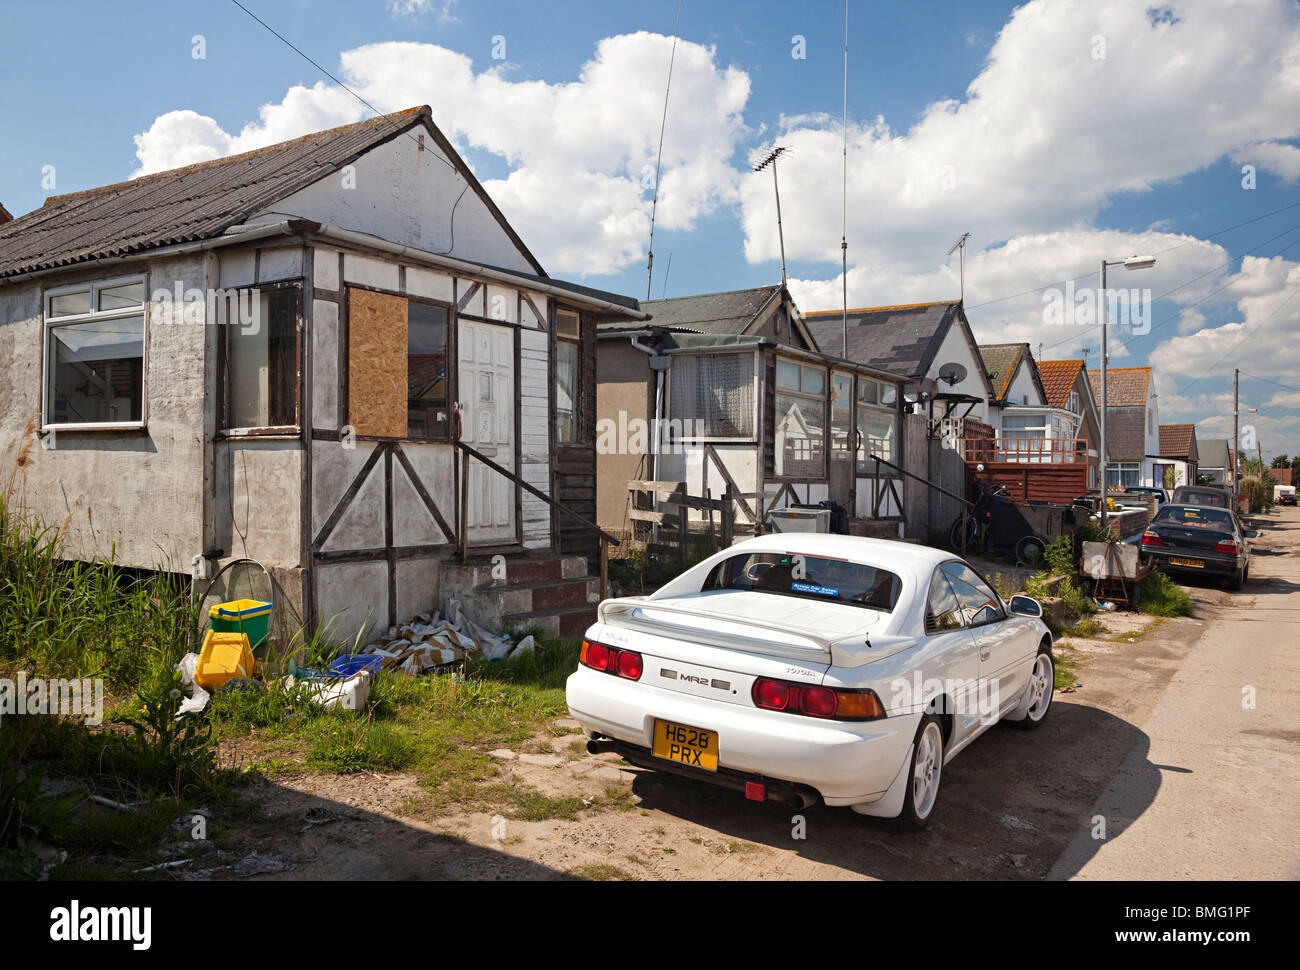 homes in Jaywick in Essex, UK Stock Photo